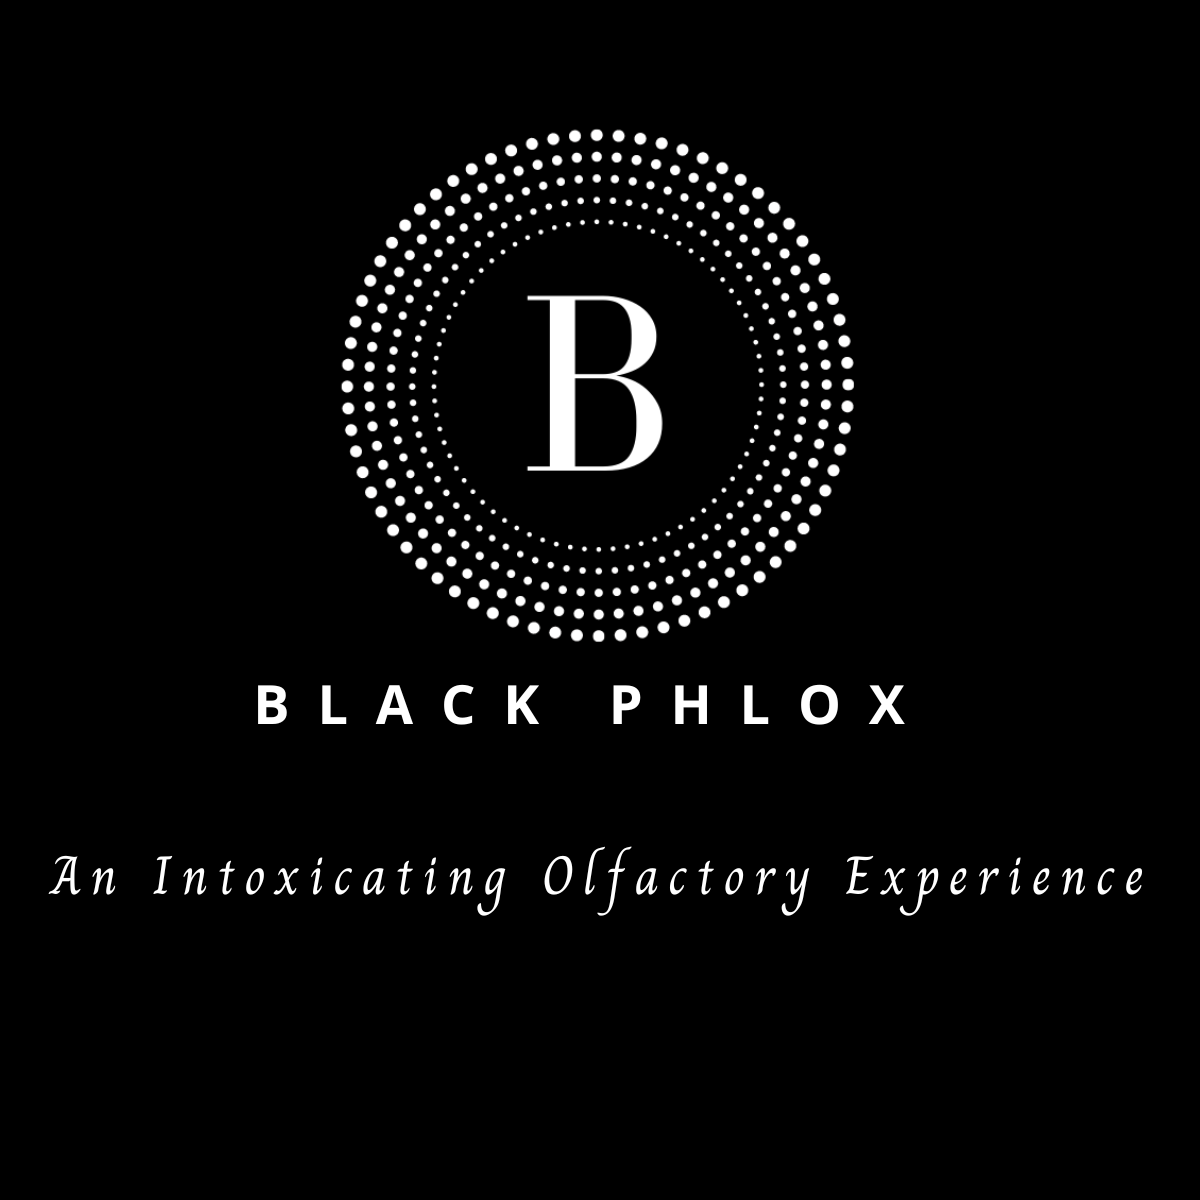 Black Phlox Candle Company